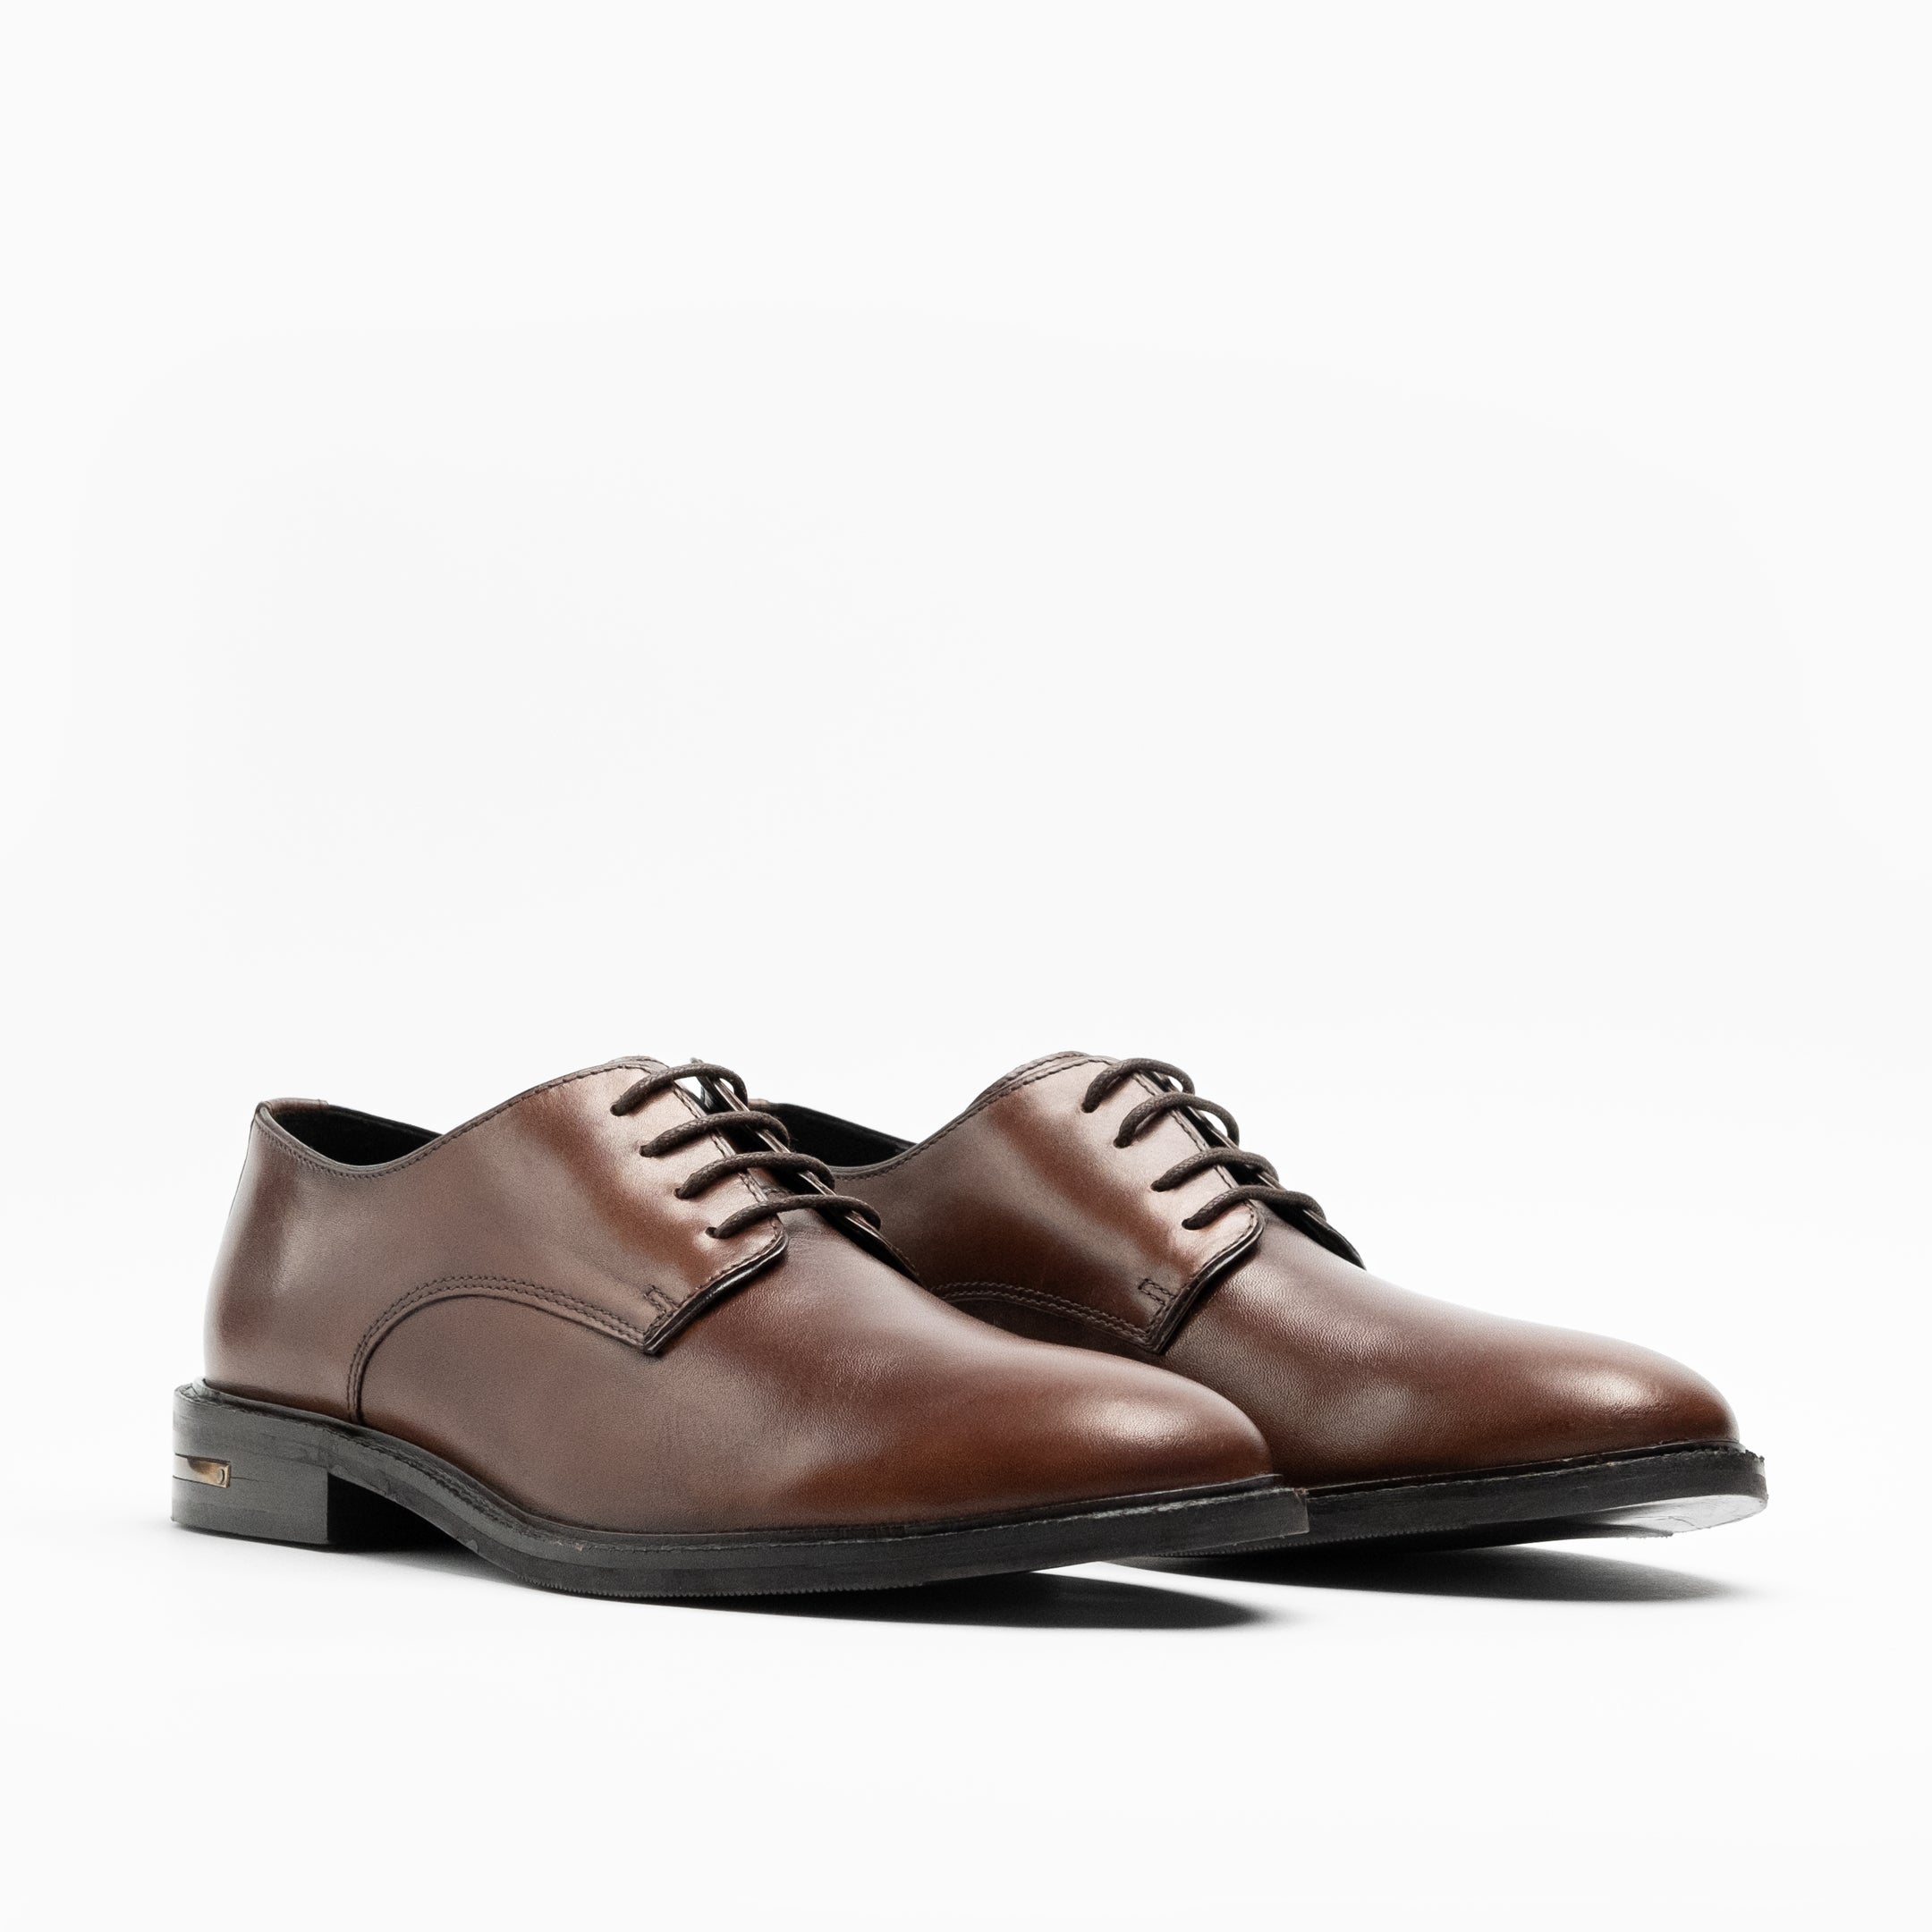 Walk London Mens Oliver Derby Shoe in Brown Leather